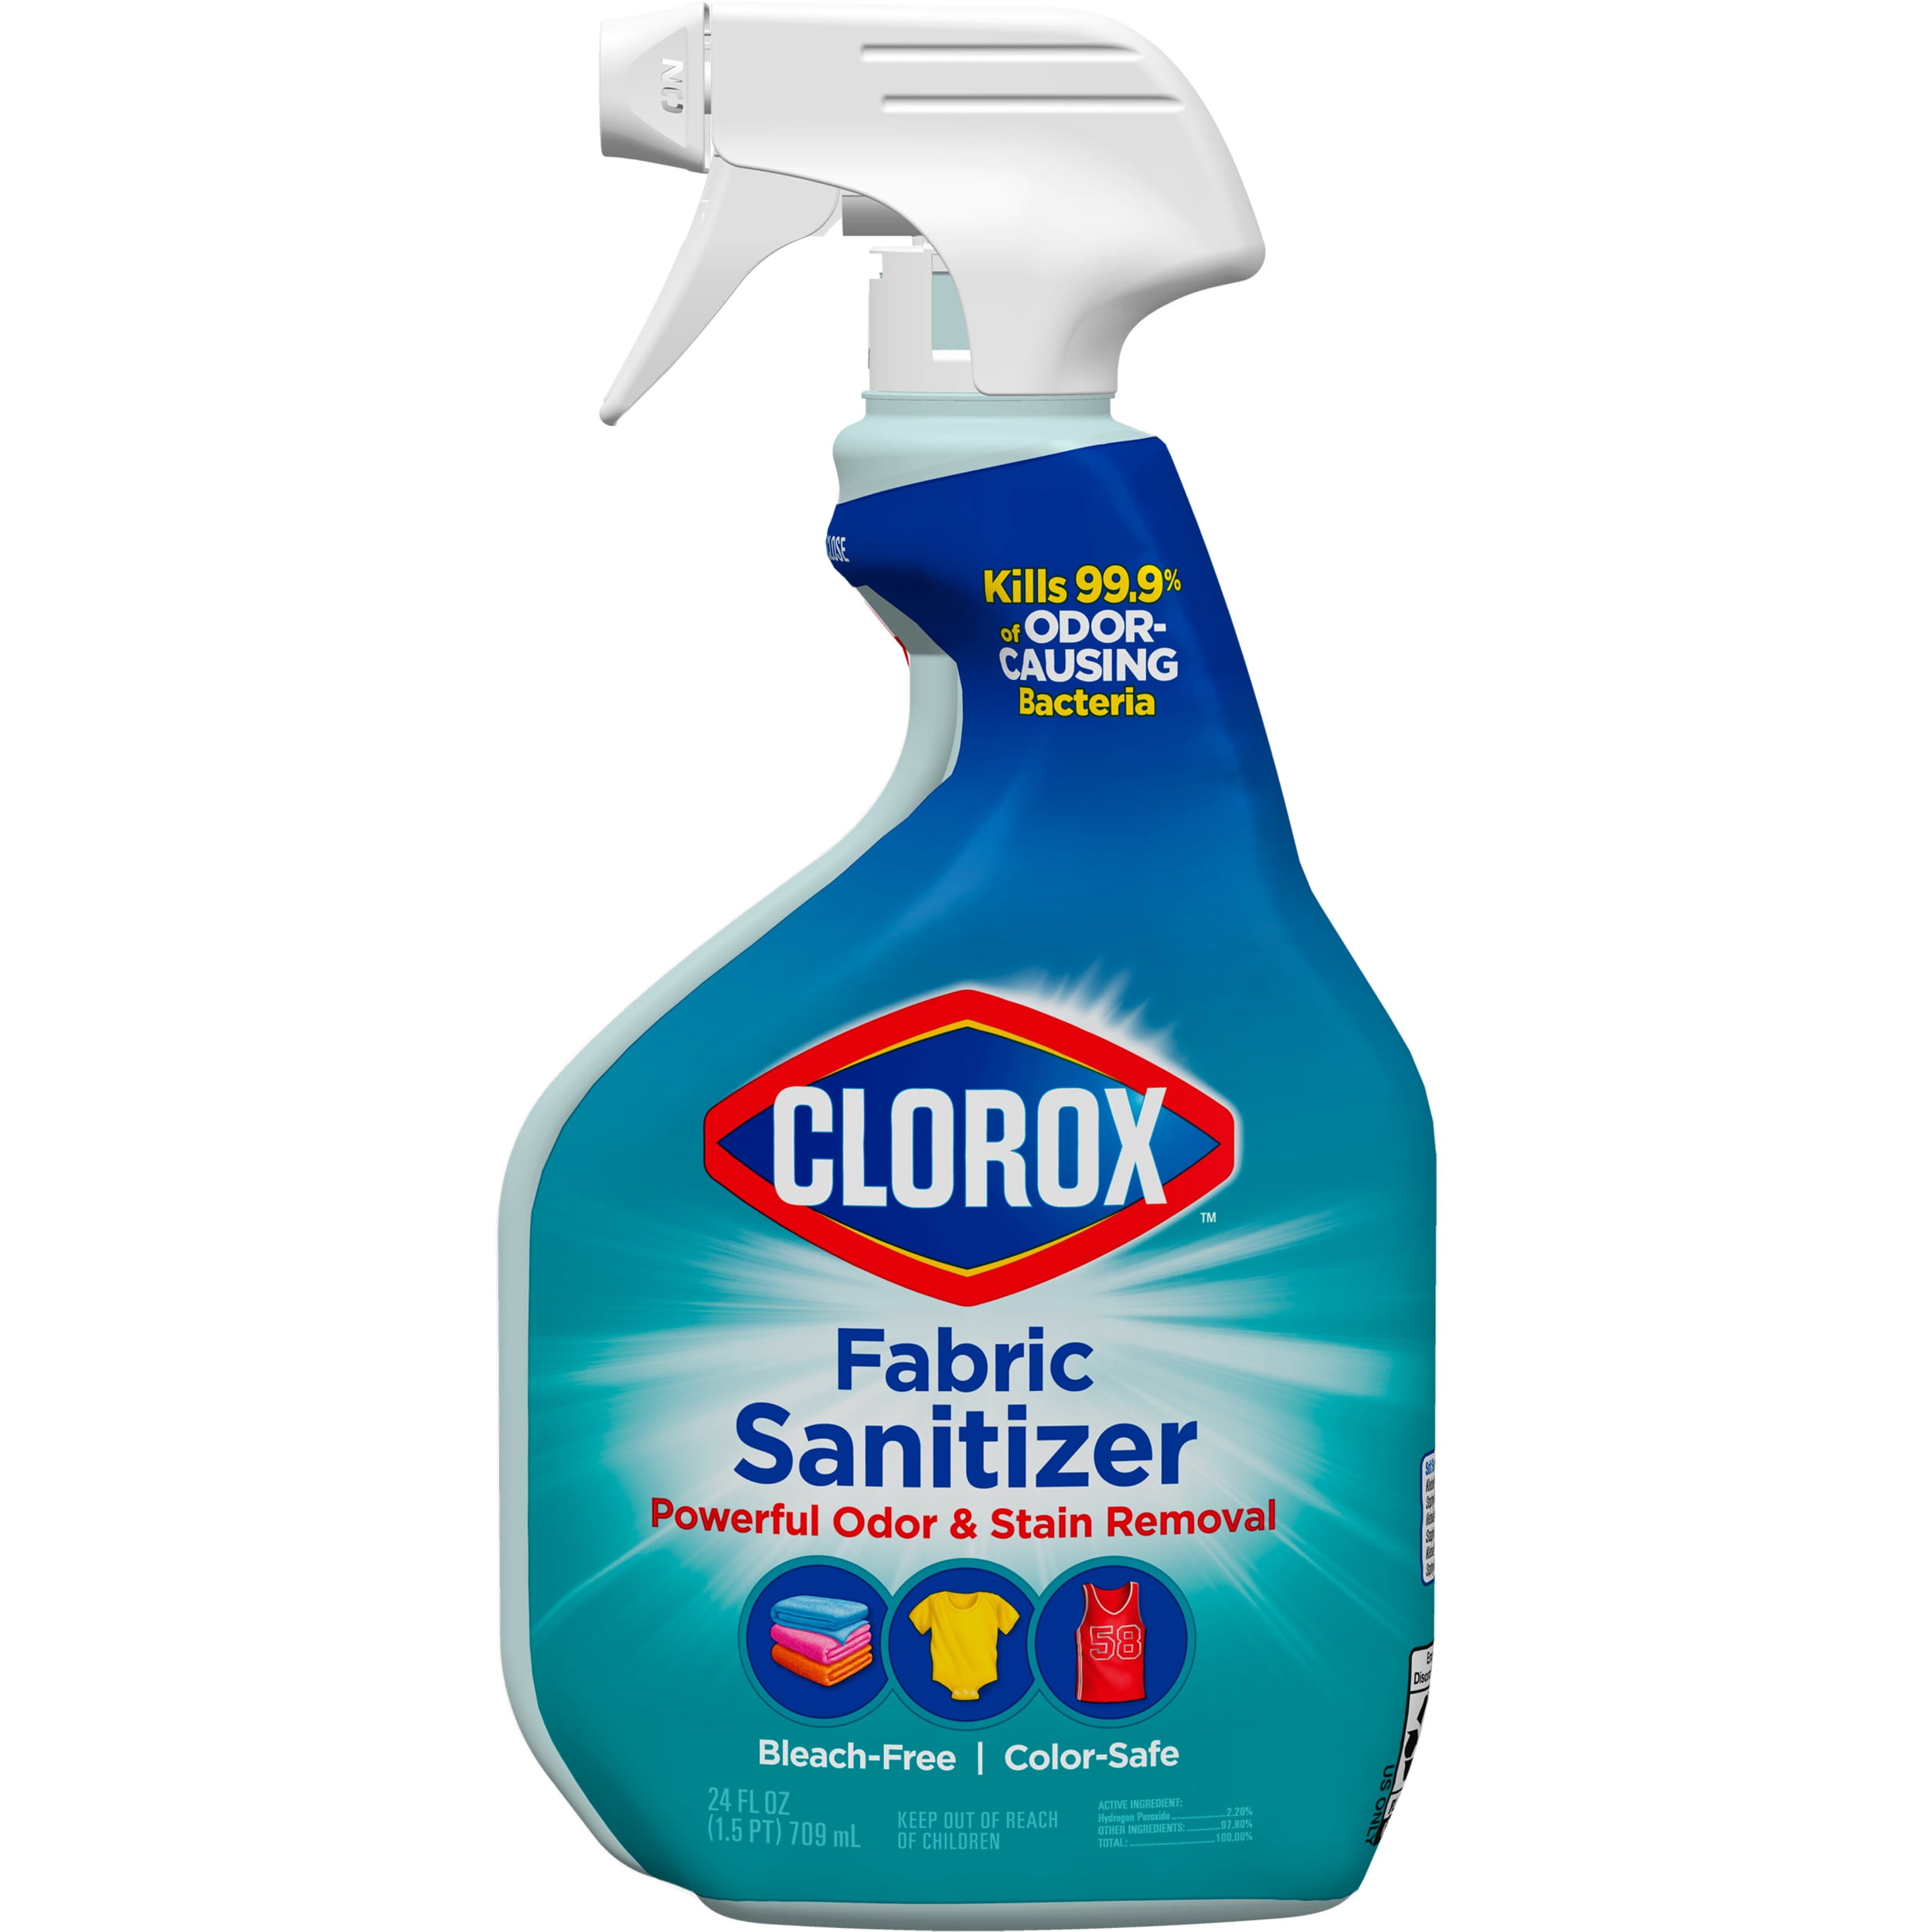 Clorox Fabric Odor Remover, Active Fresh - 16 fl oz